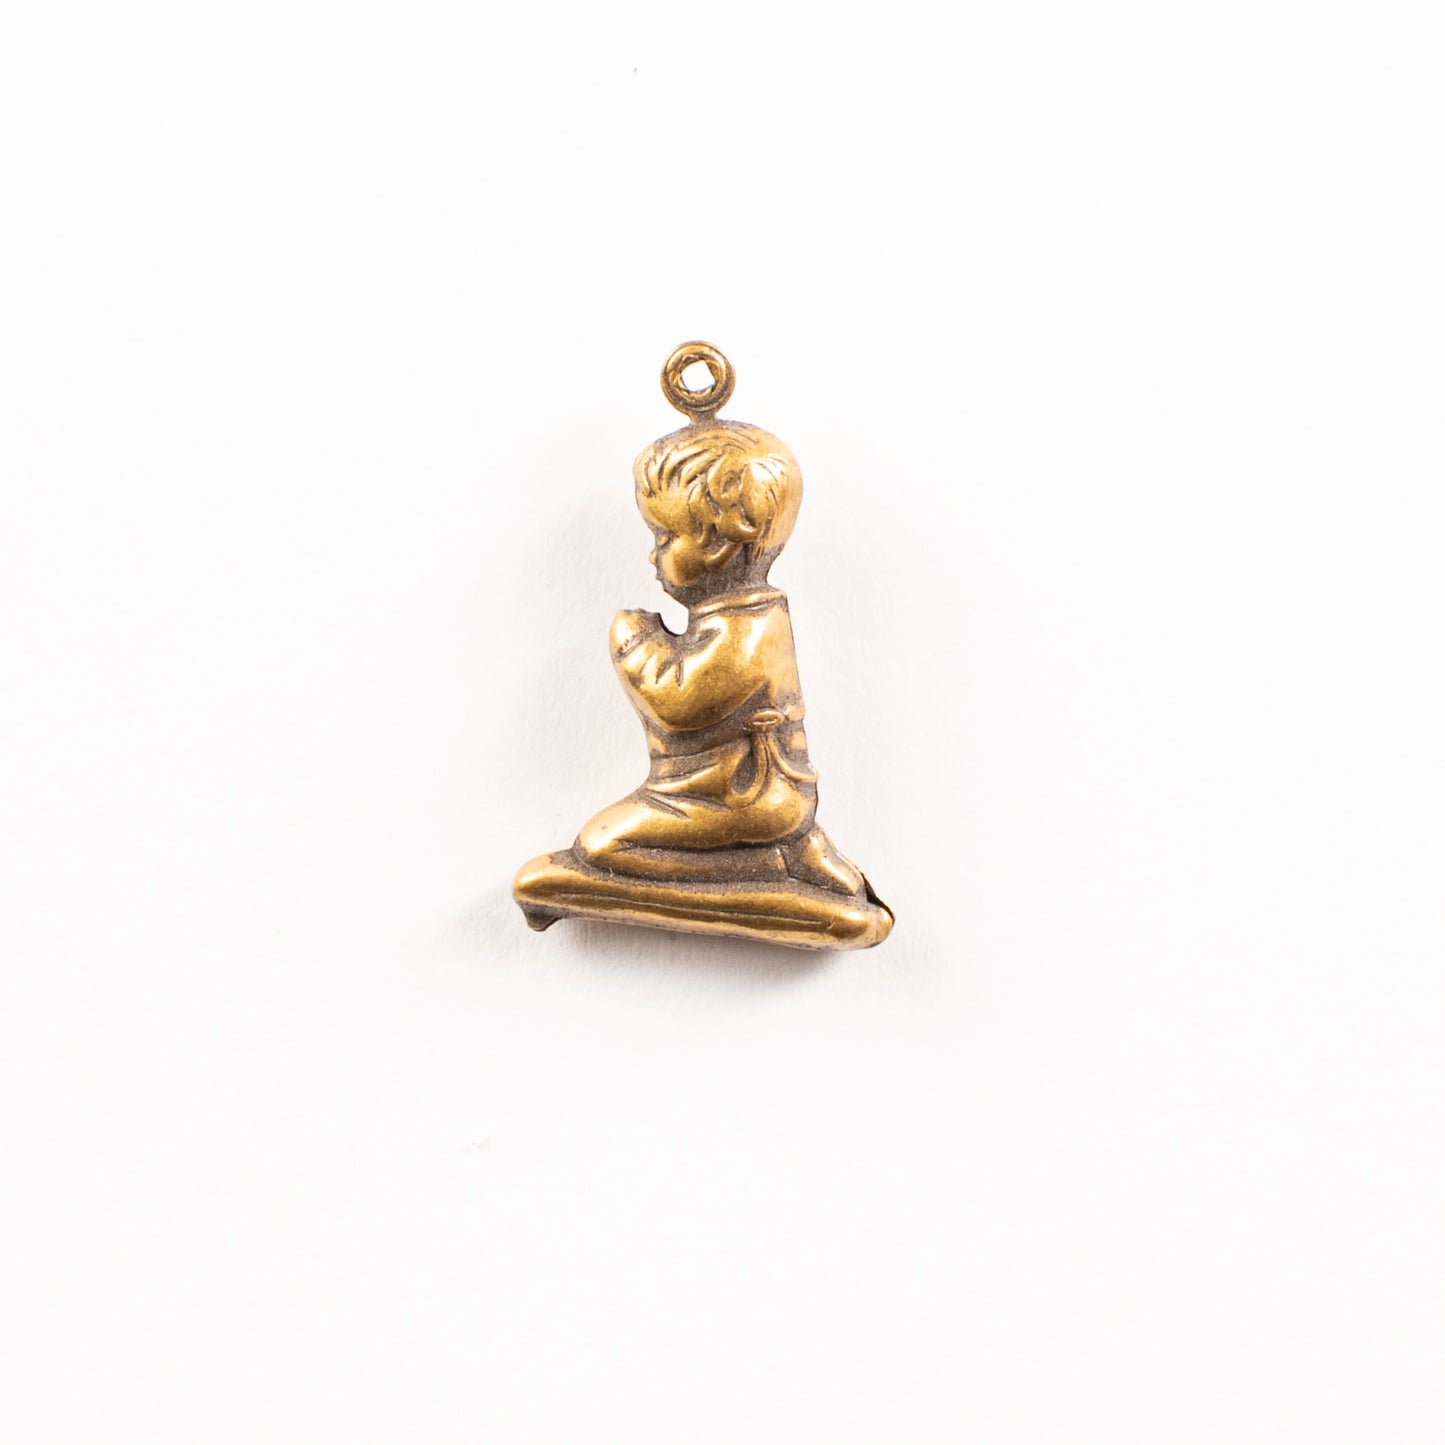 25mm Praying Child Charm, Antique Gold, ea